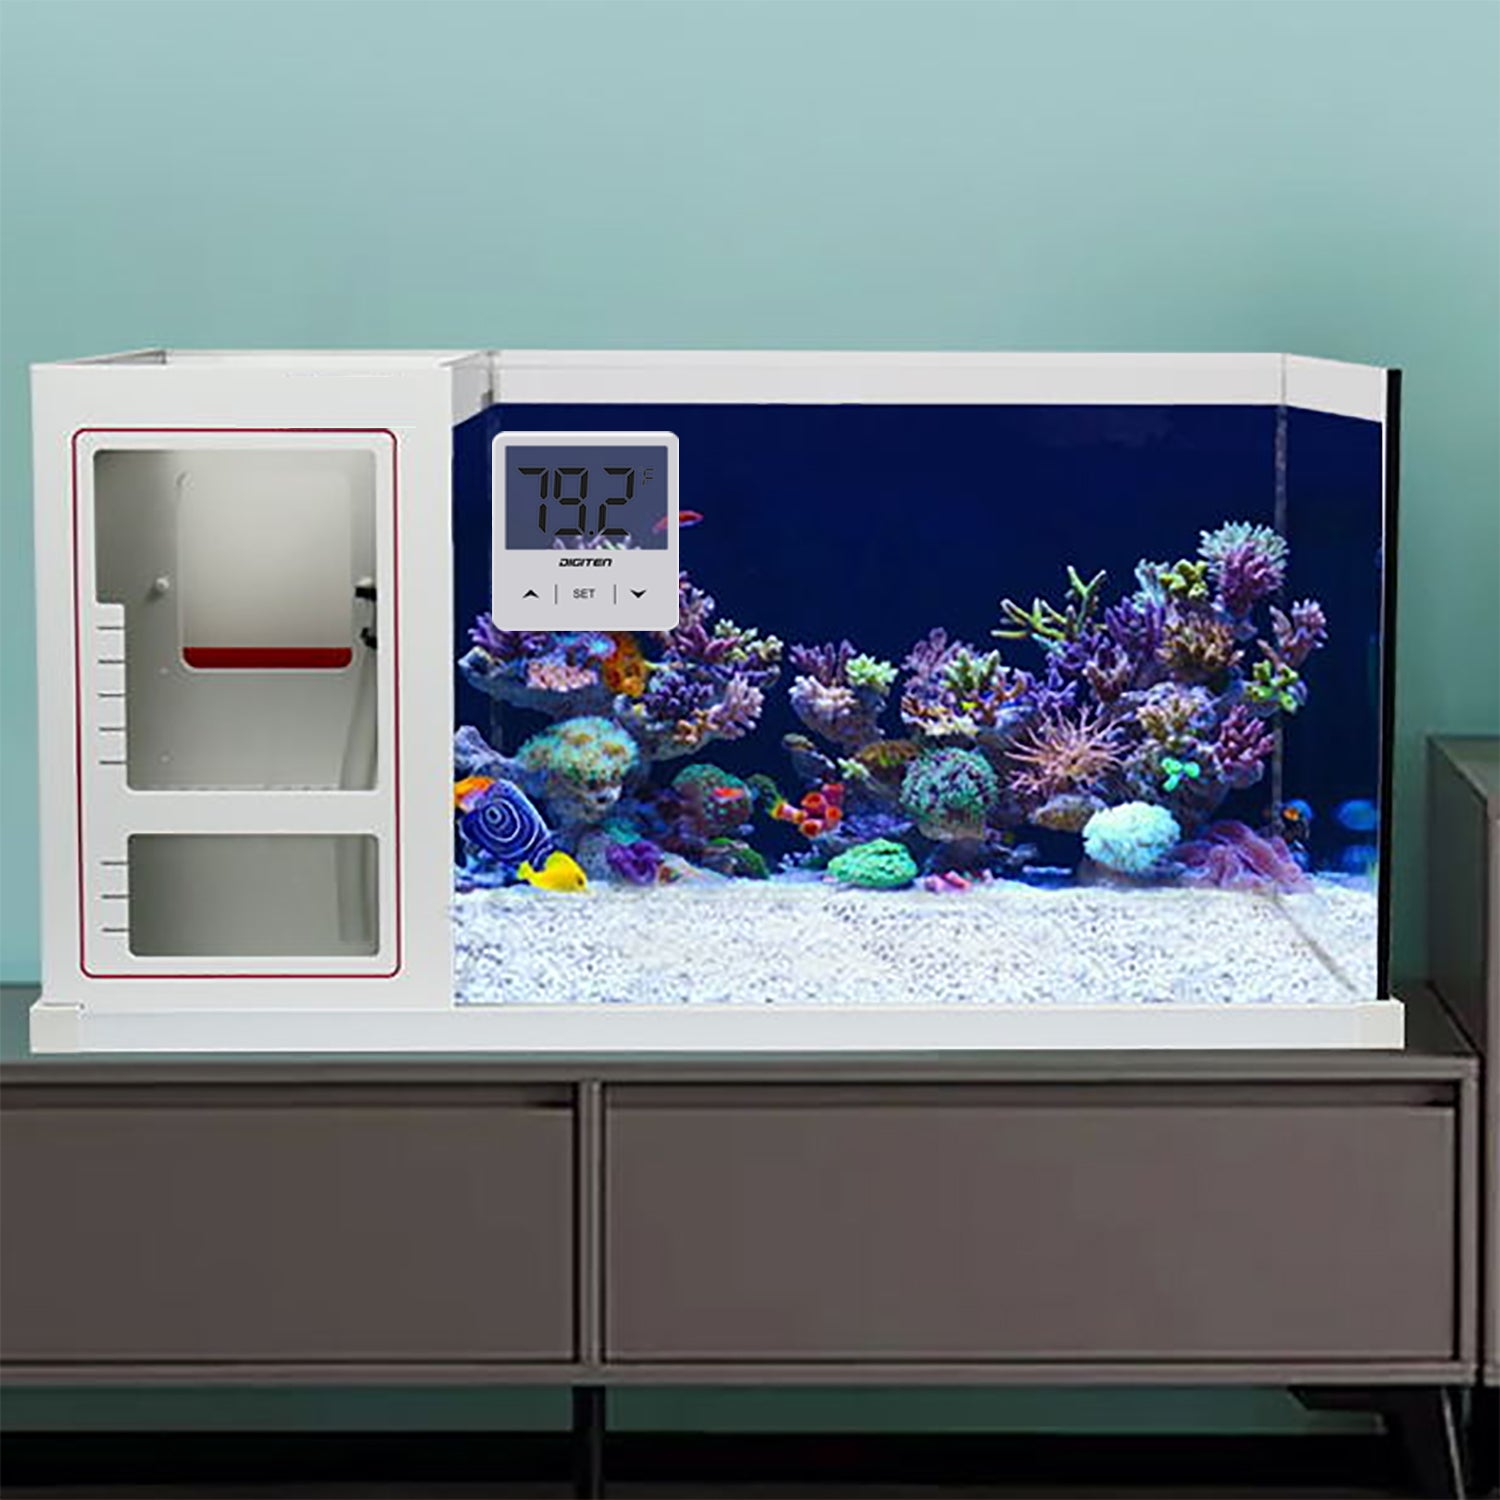 HDE Digital Aquarium Thermometer Fish Tank Thermostat Water